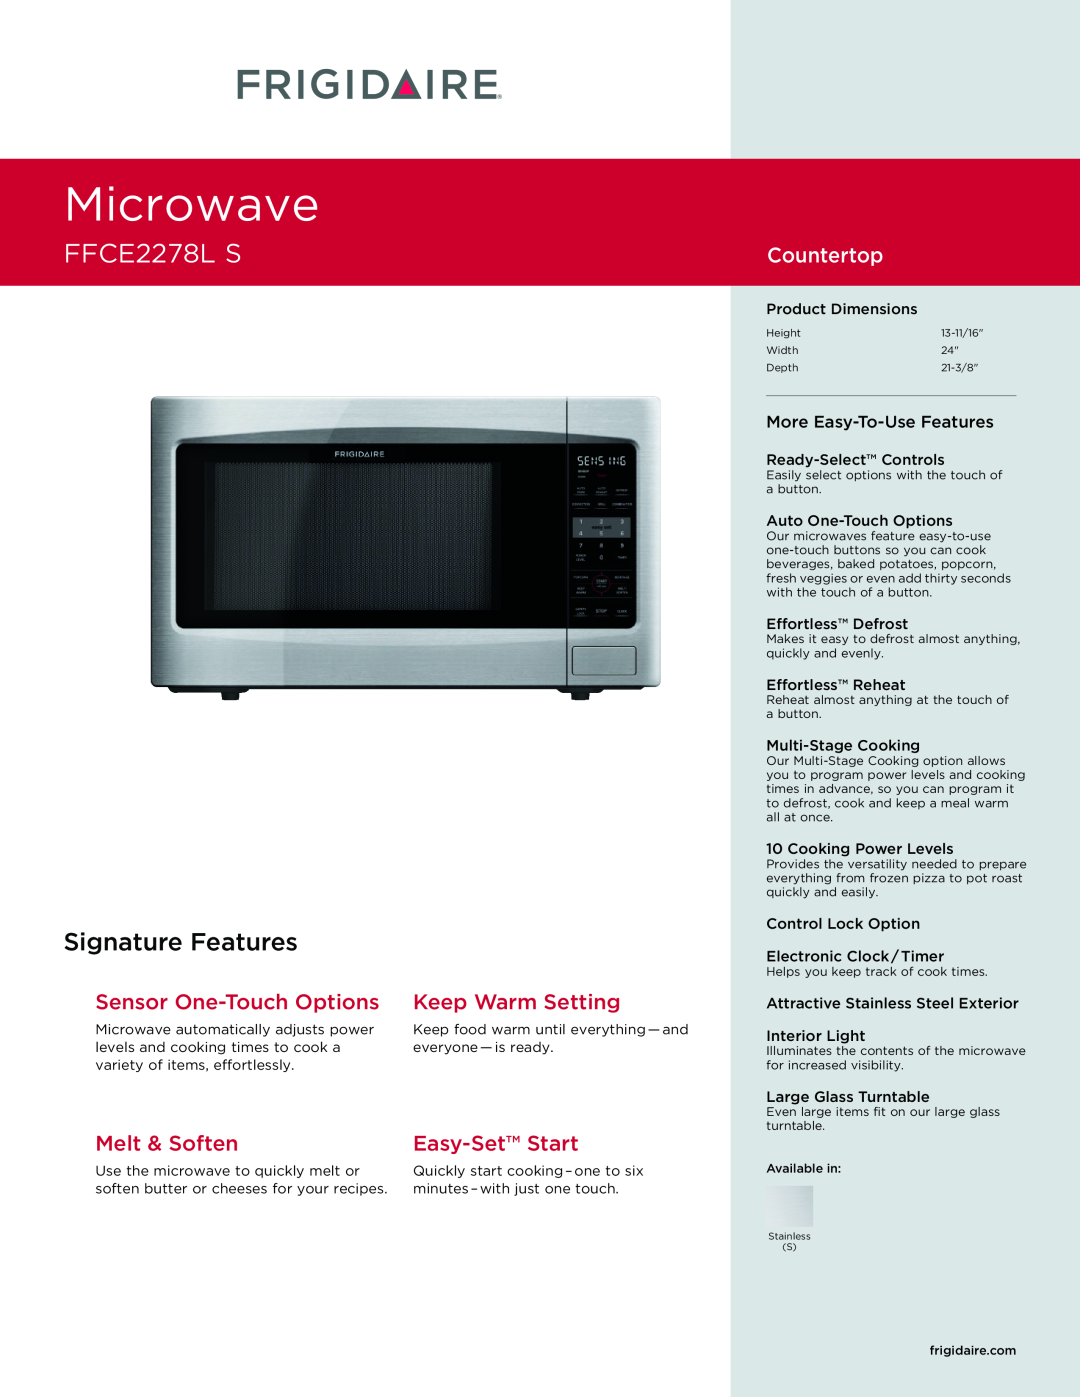 Frigidaire FFCE2278L S dimensions Microwave, Signature Features, Sensor One-TouchOptions, Keep Warm Setting, Melt & Soften 